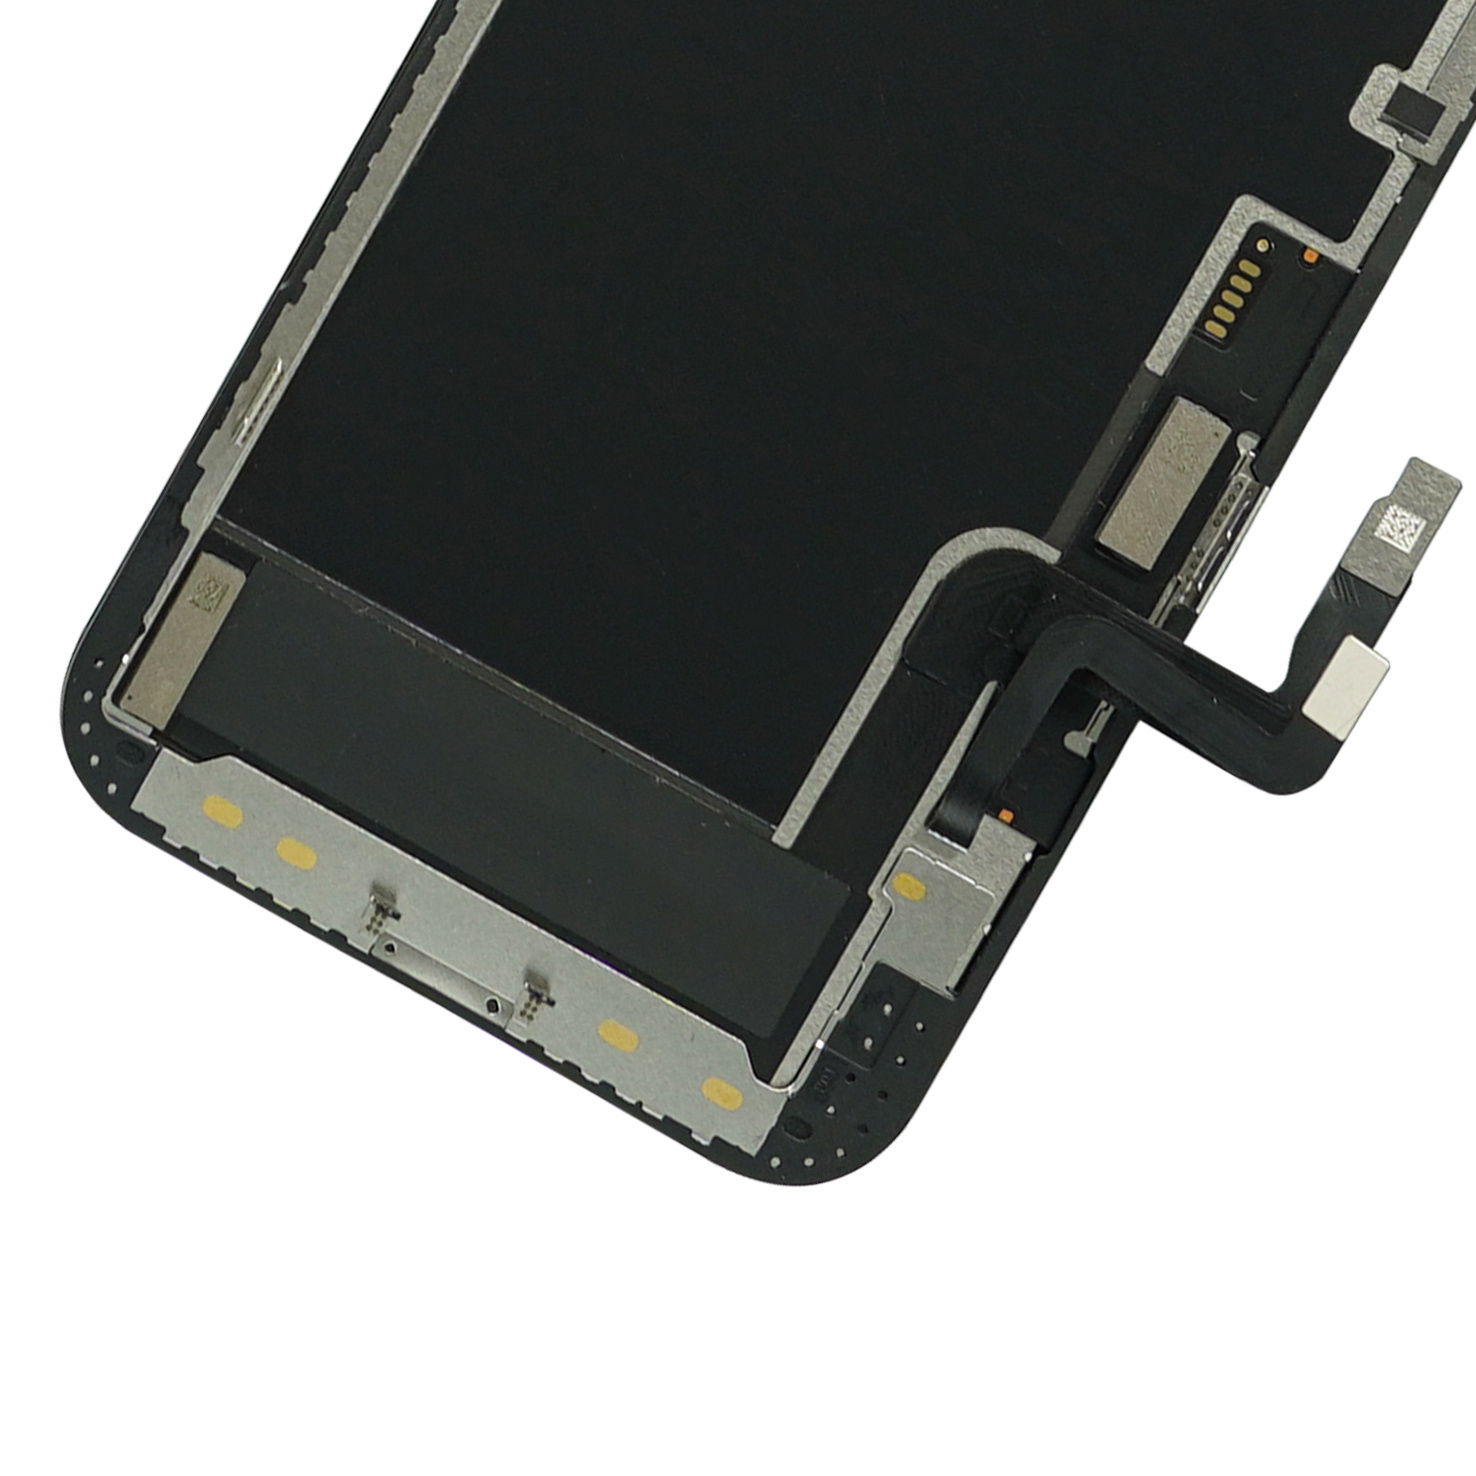  Adaptador Lightning a HDMI para iPhone 12/12 Pro Max 11  Pro/XS/XR/X/8 7 6 Plus SE, iPad Pro Mini 2, conector iPhone a HDMI  compatible con iOS 10 ~ 14.1 y posteriores : Electrónica